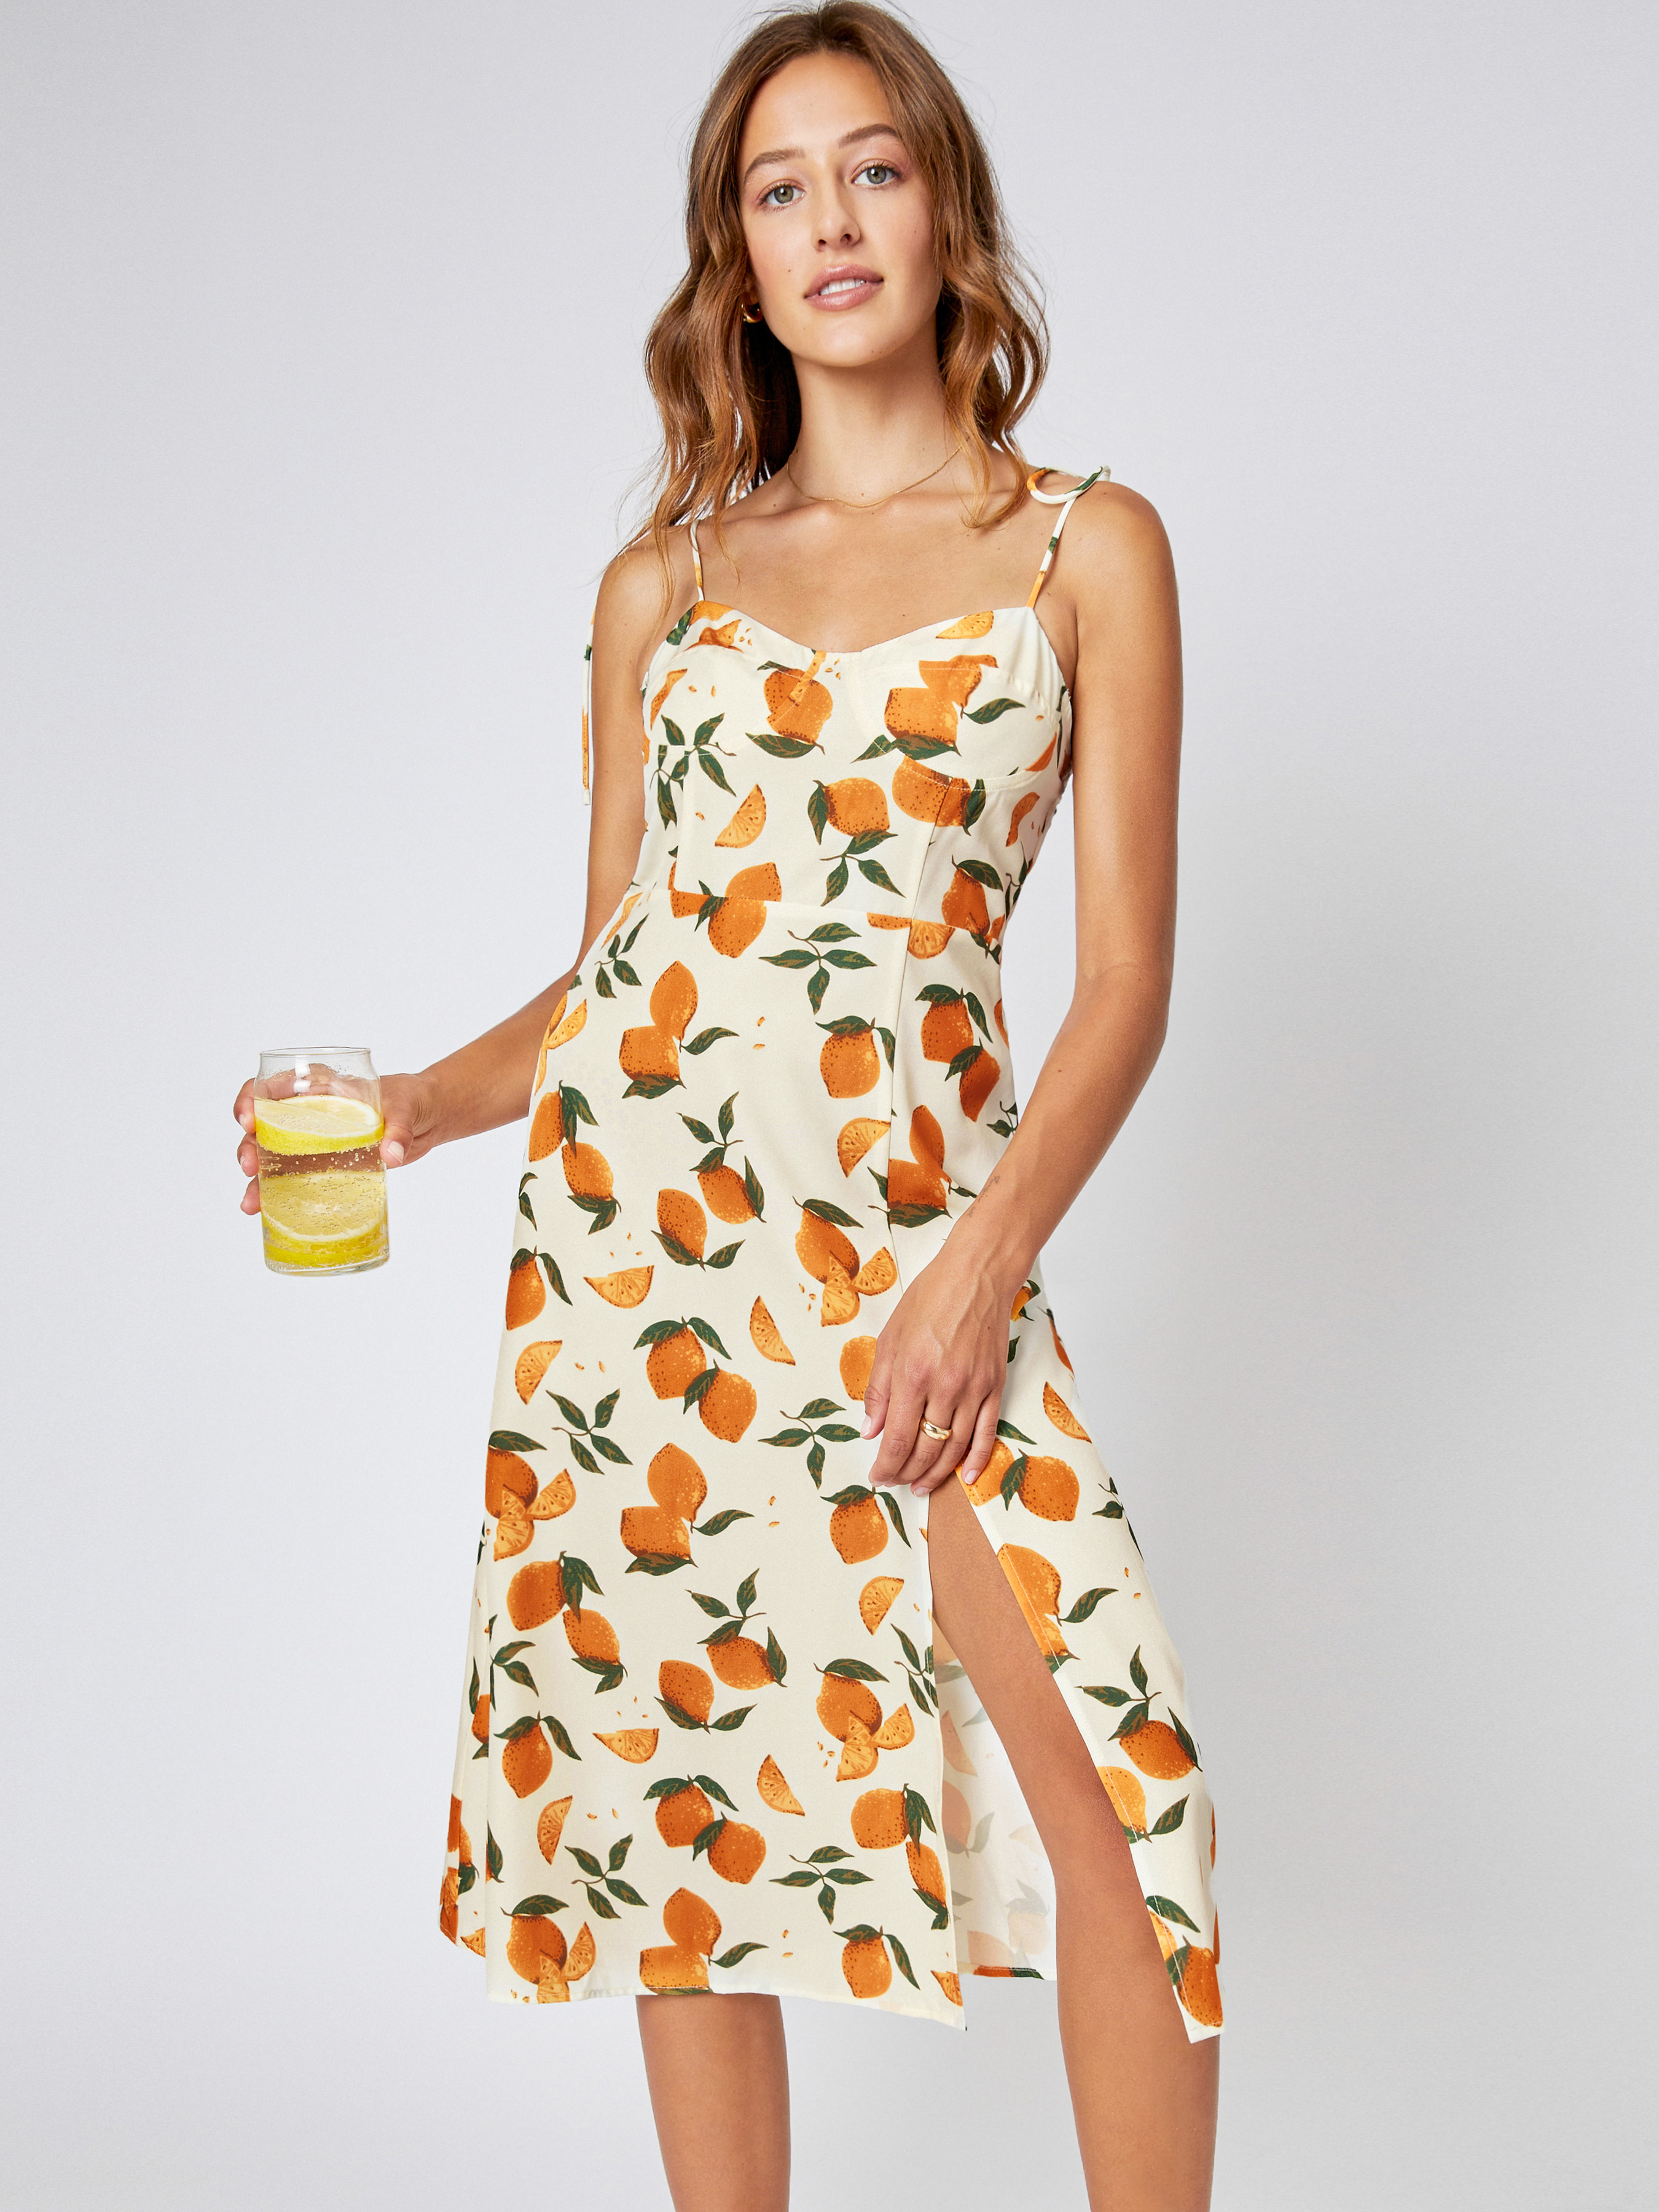 Lemon Print Dress - Etsy